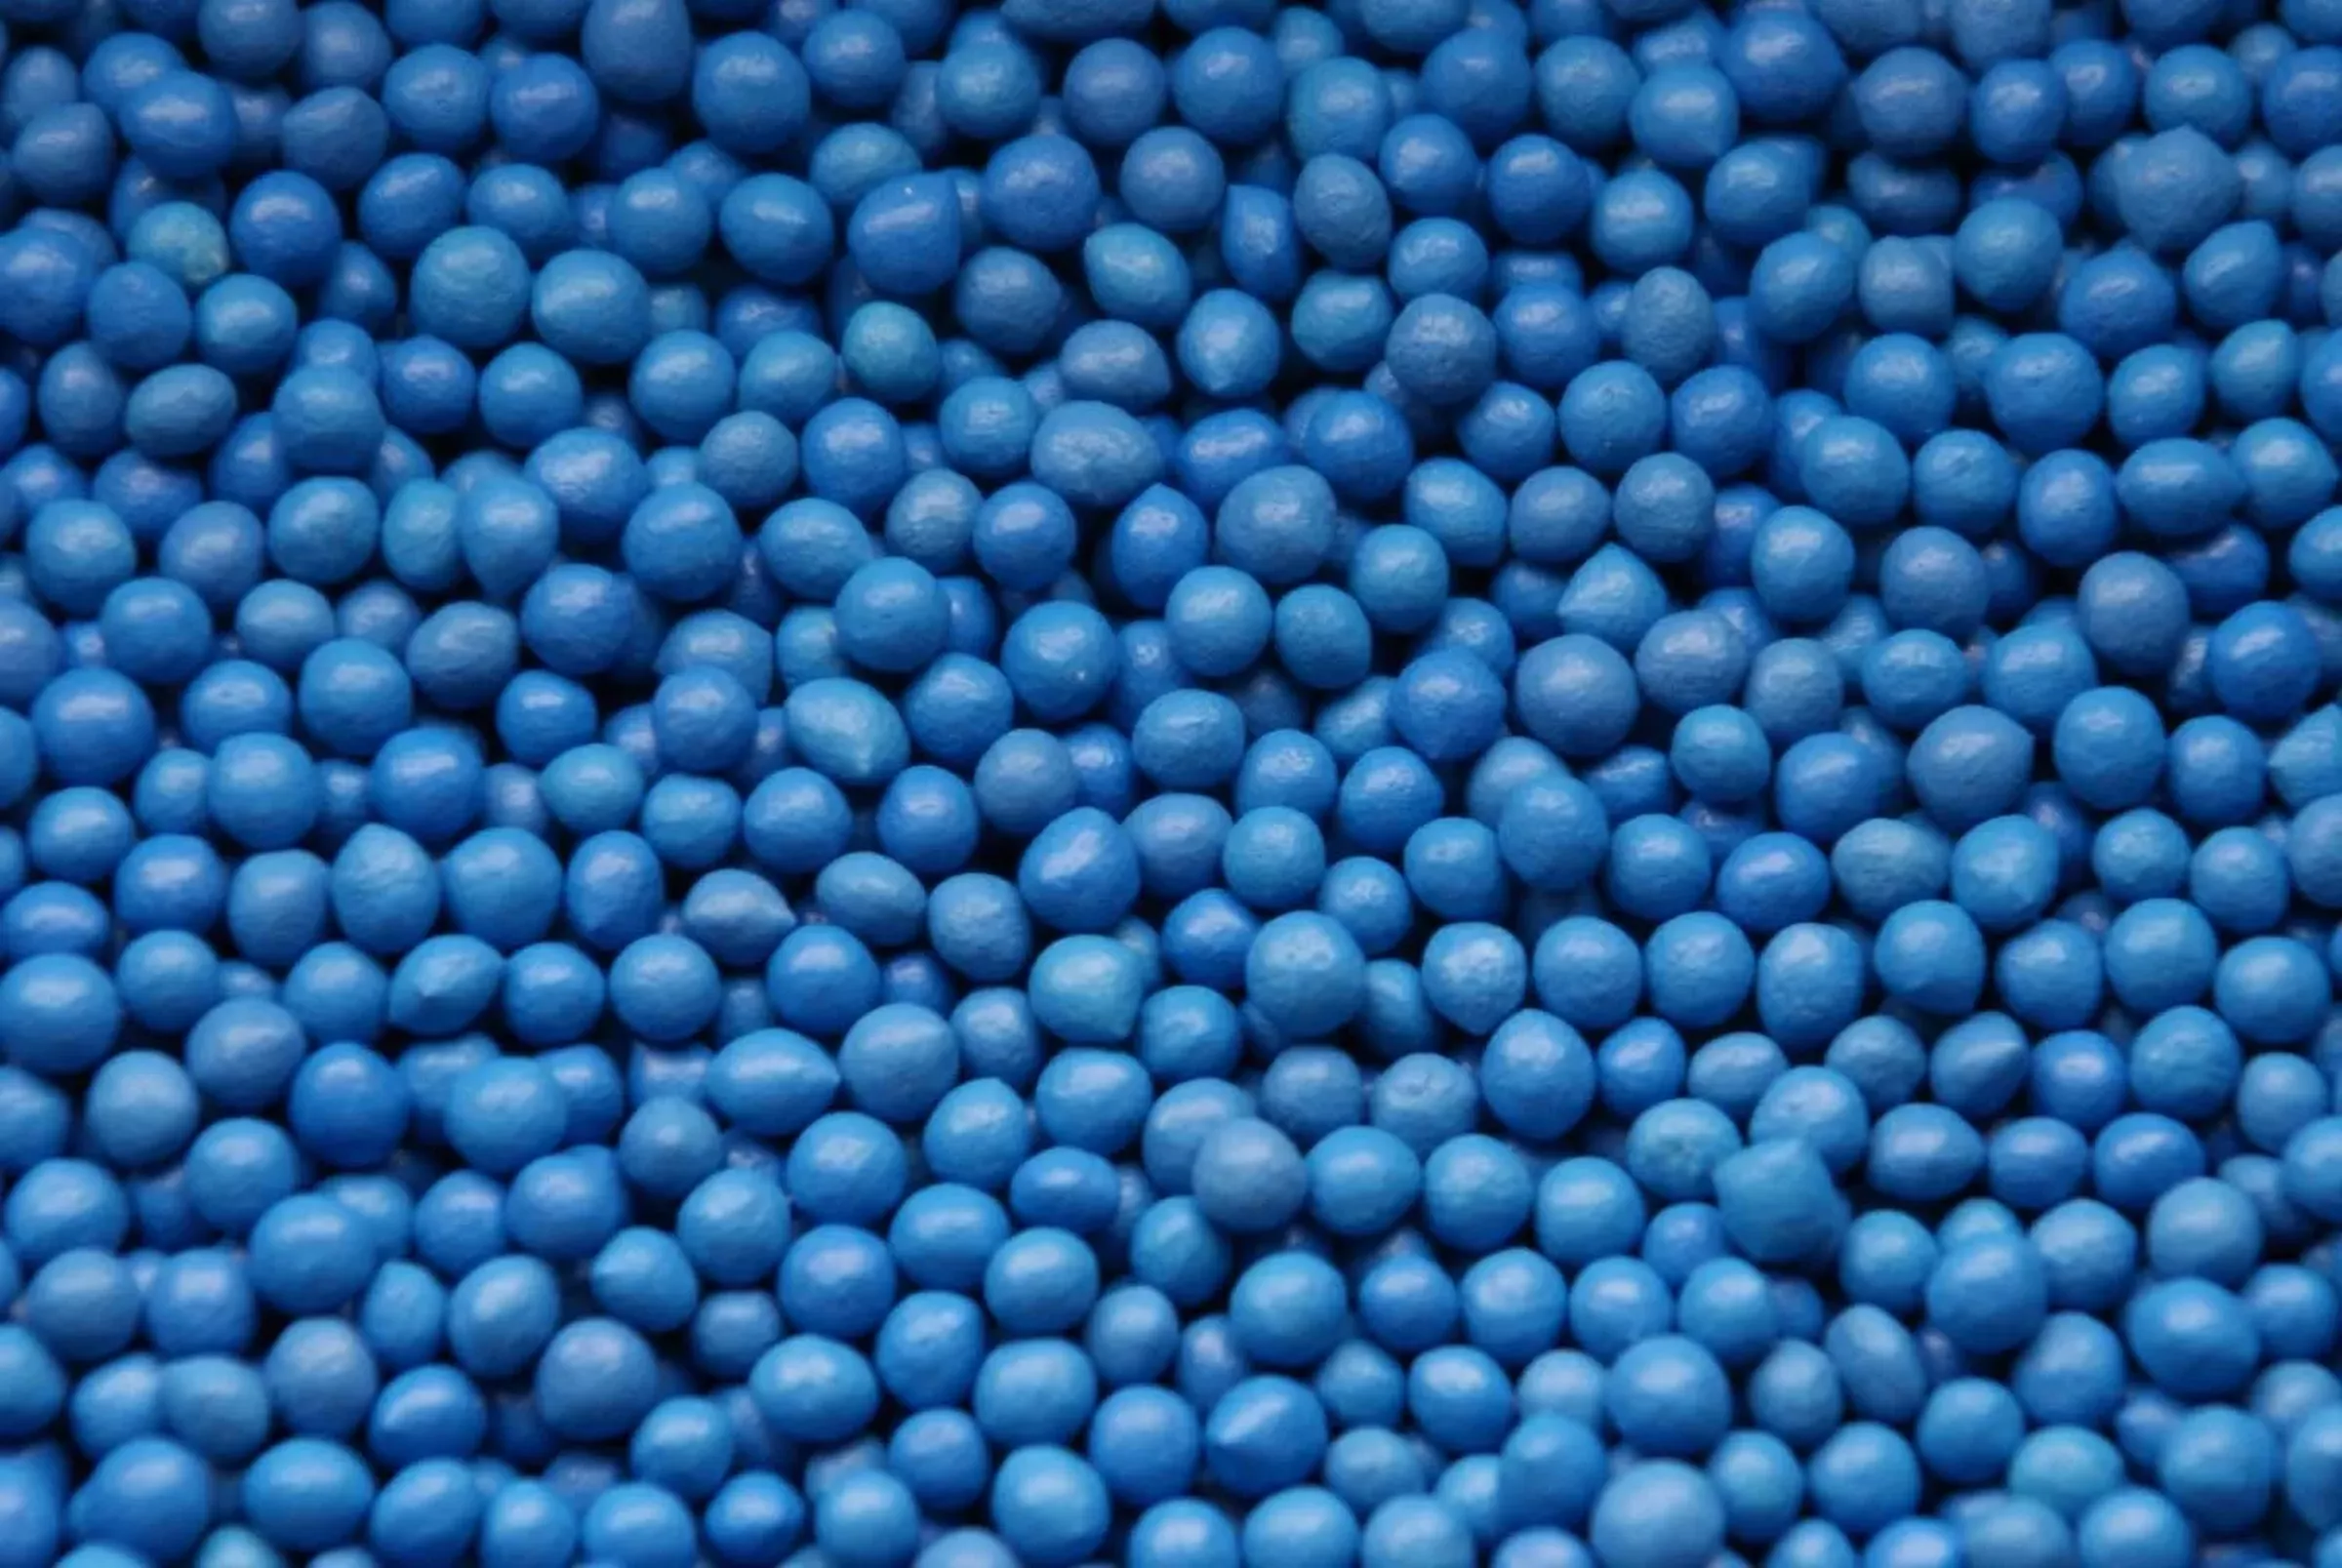 Sesvanderhave sugar beet seed blue seeds